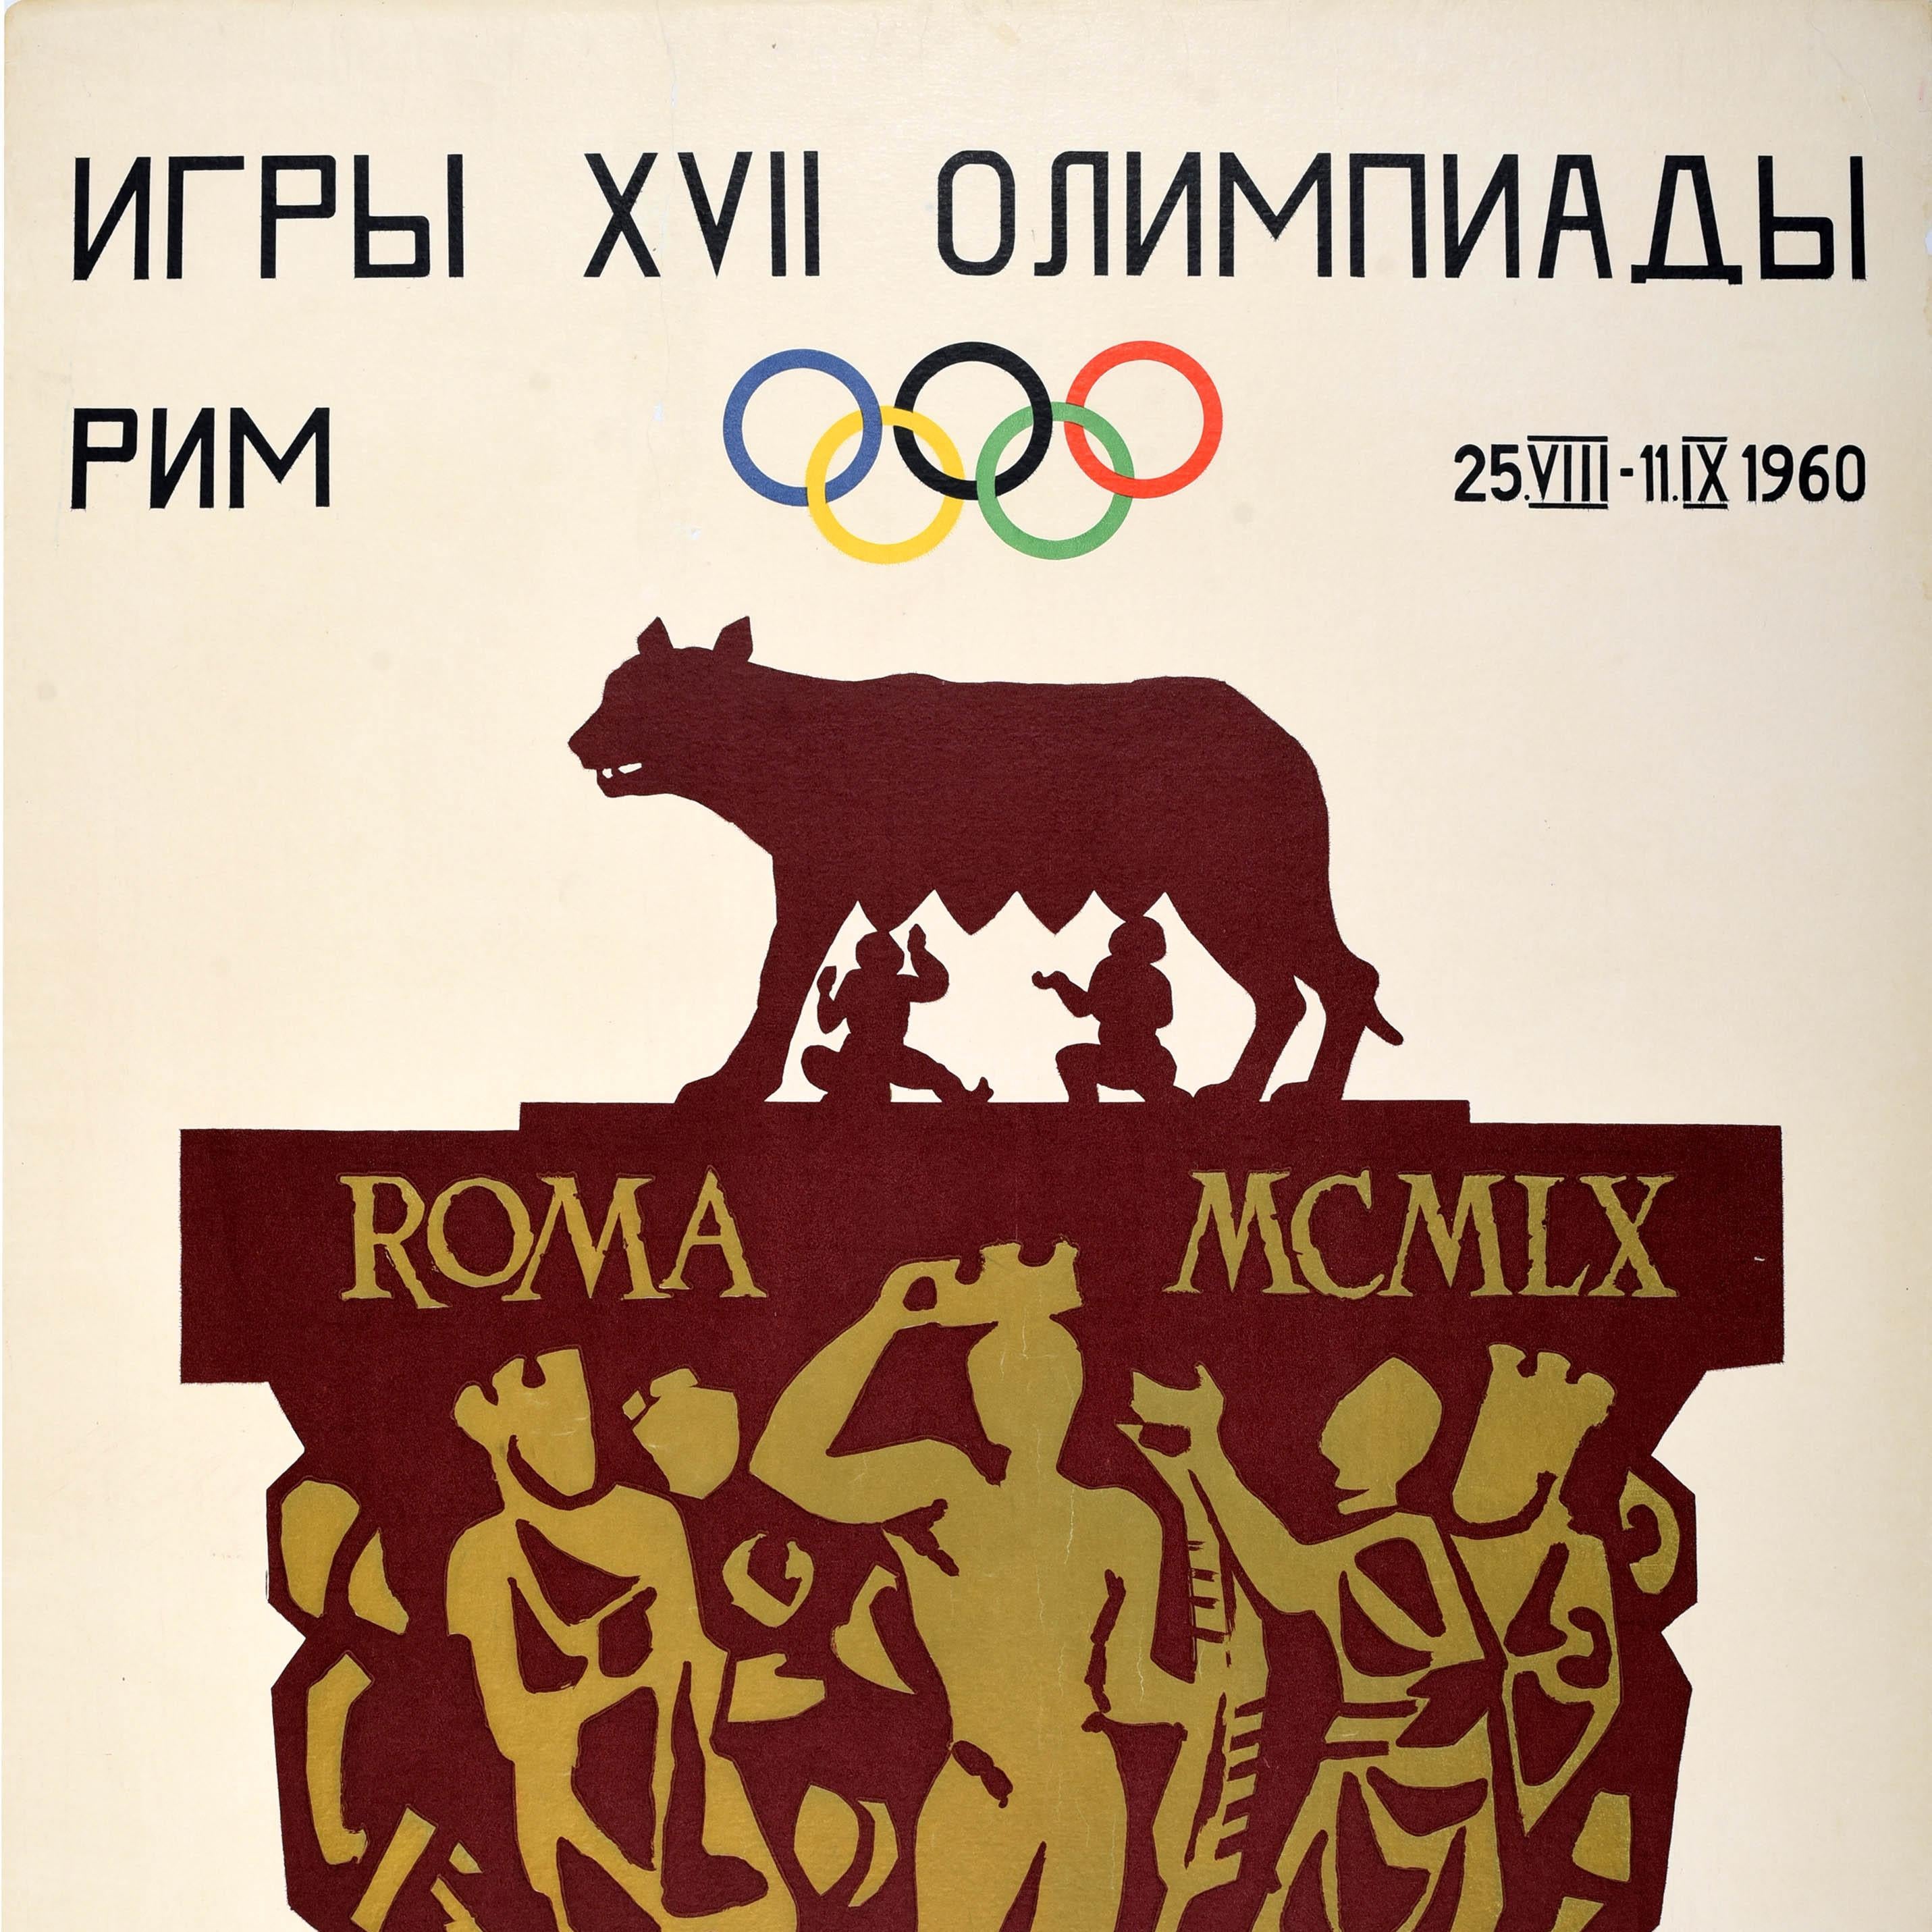 jeux olympique italie 1960